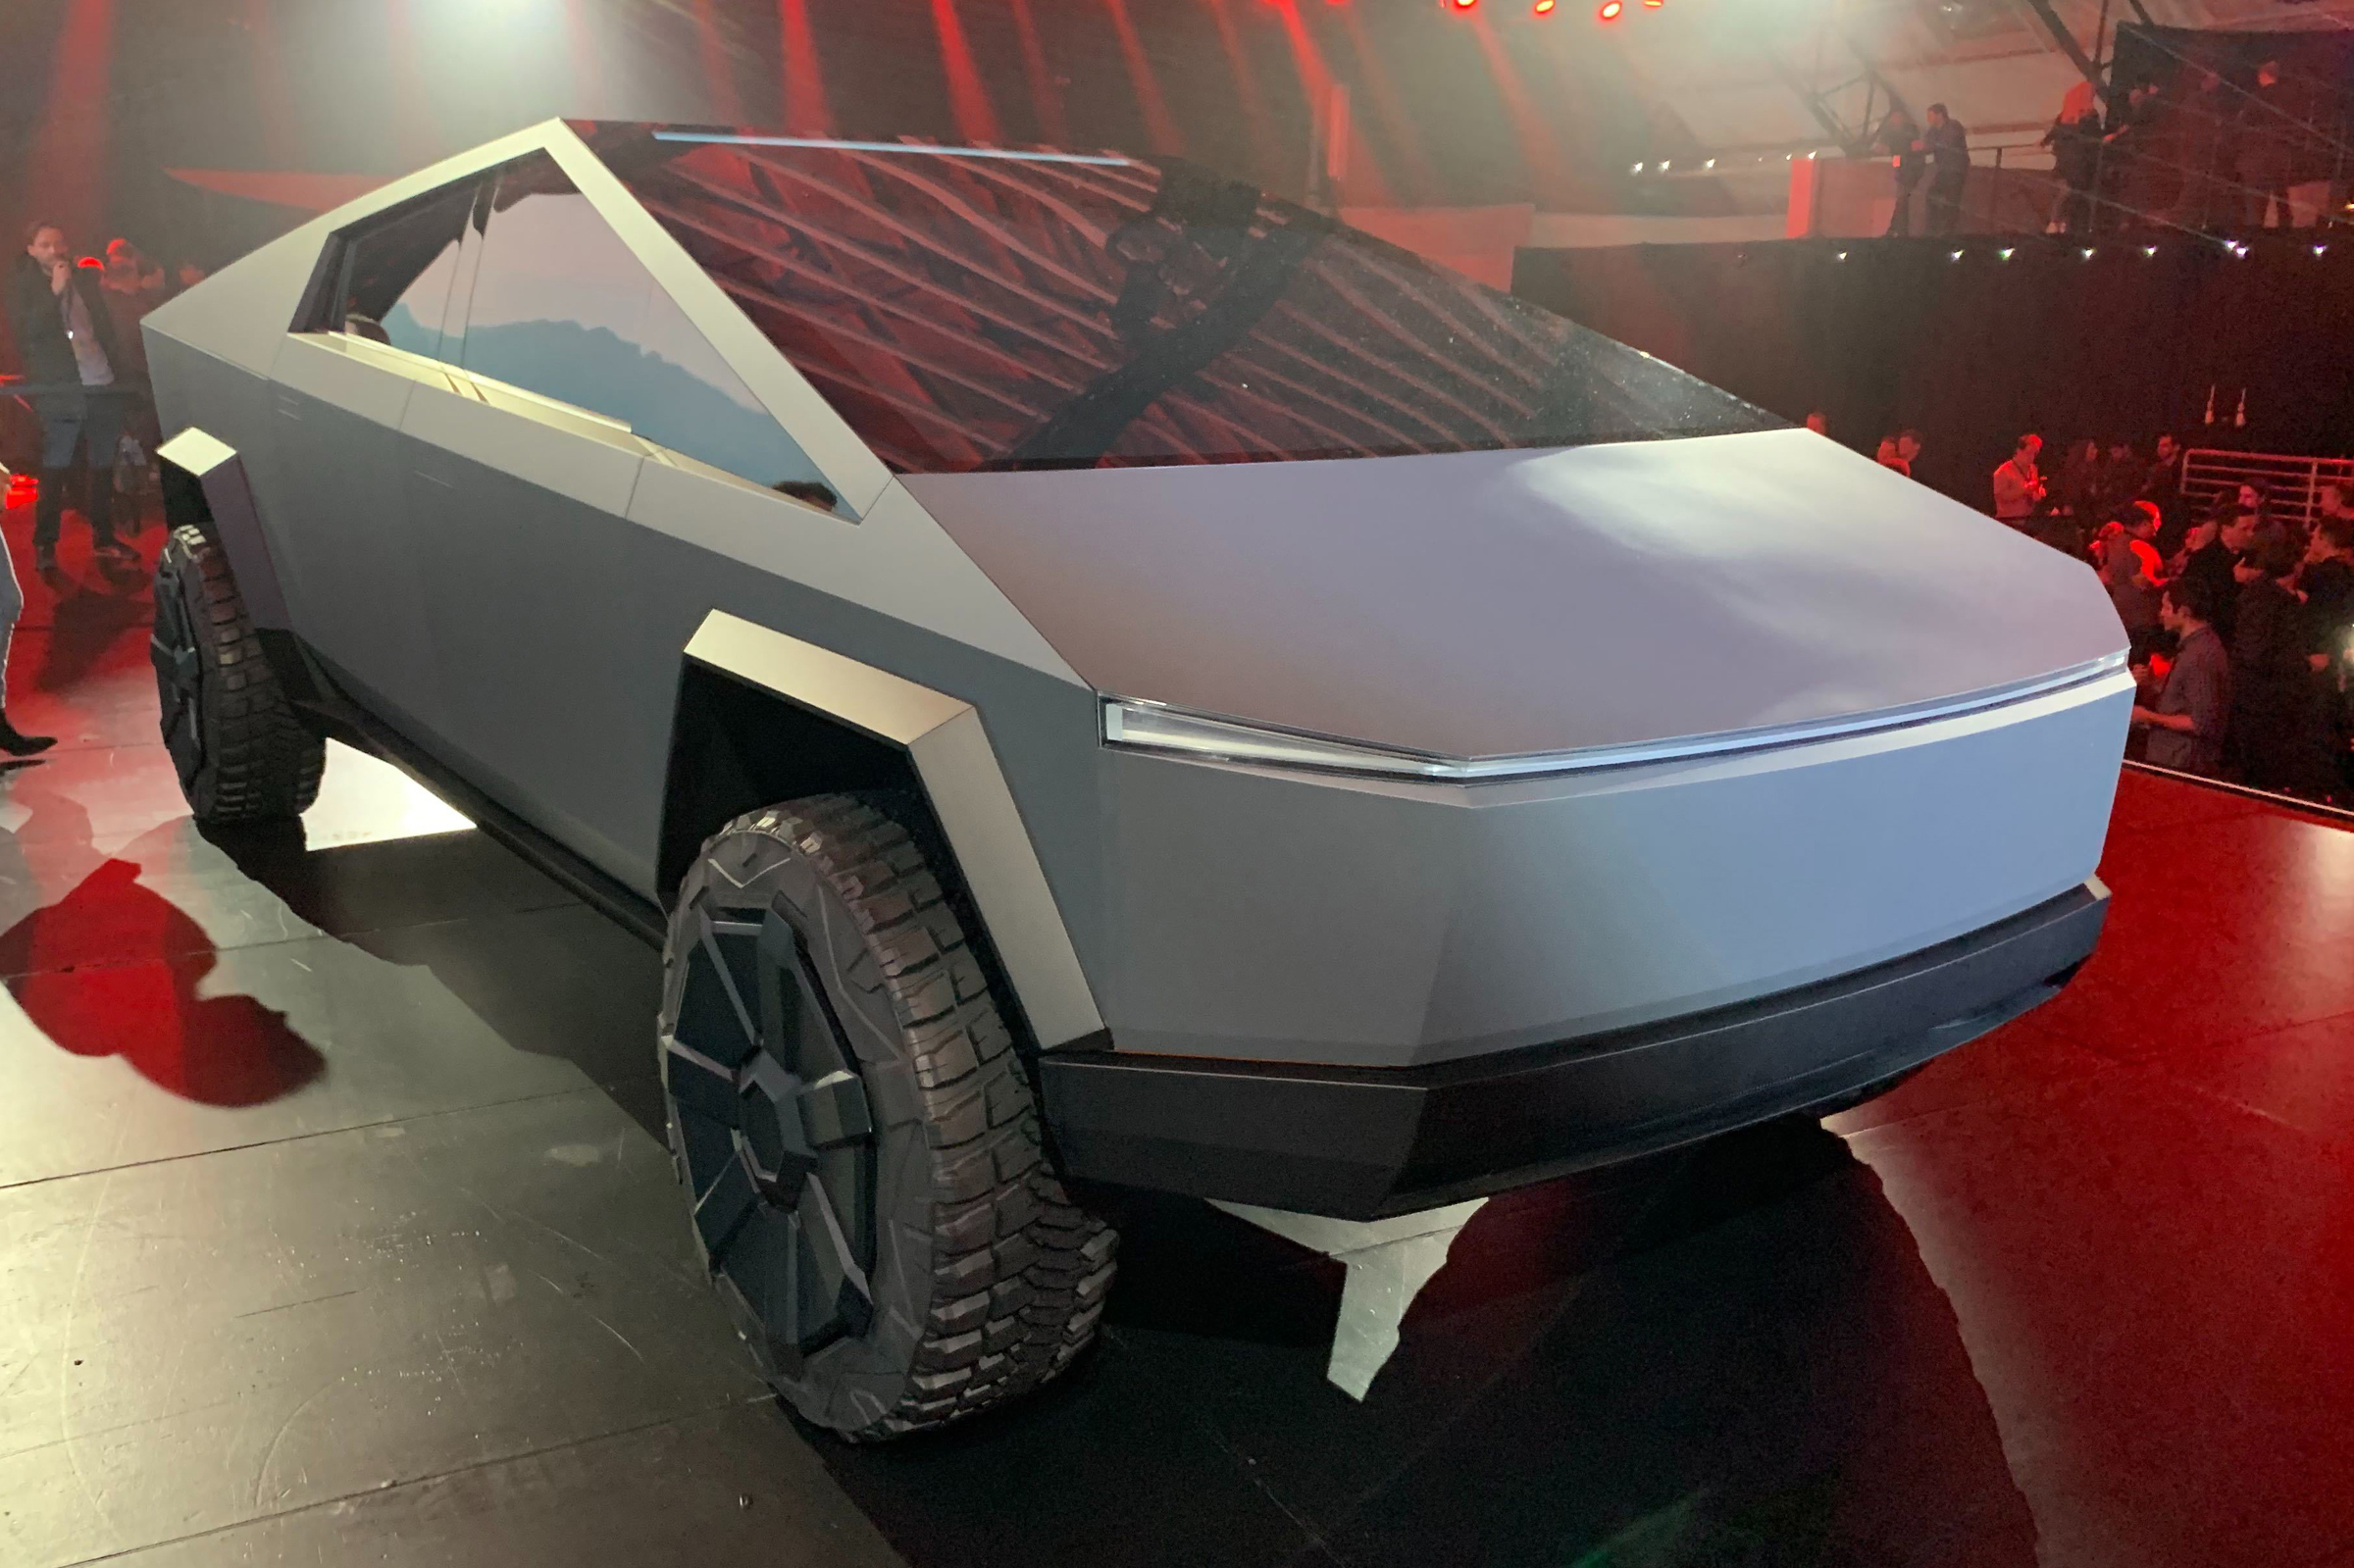 New Tesla Cybertruck pickup breaks cover: full details and